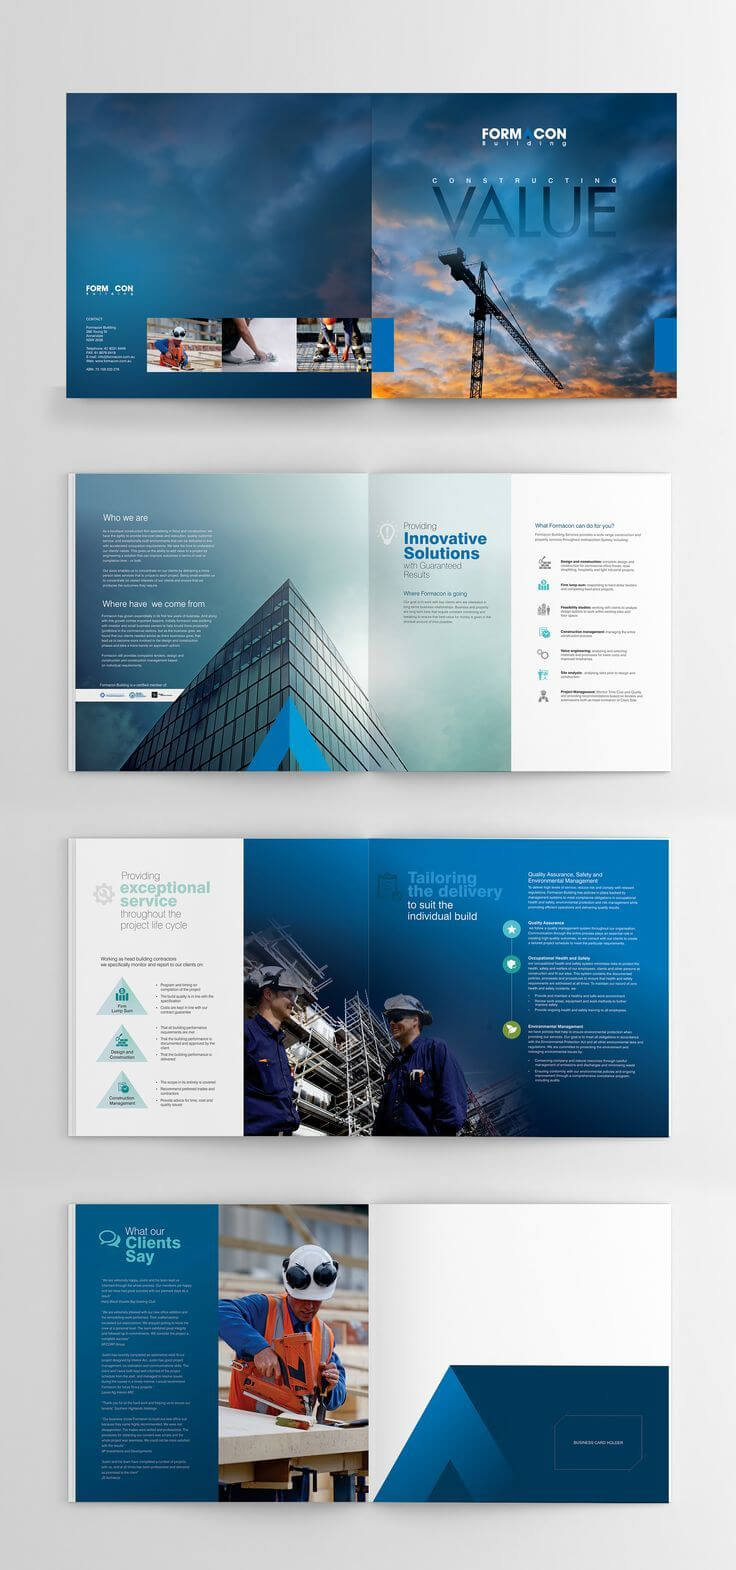 100+ Free Brochure Templates, Design & Print Brochures With Online Free Brochure Design Templates